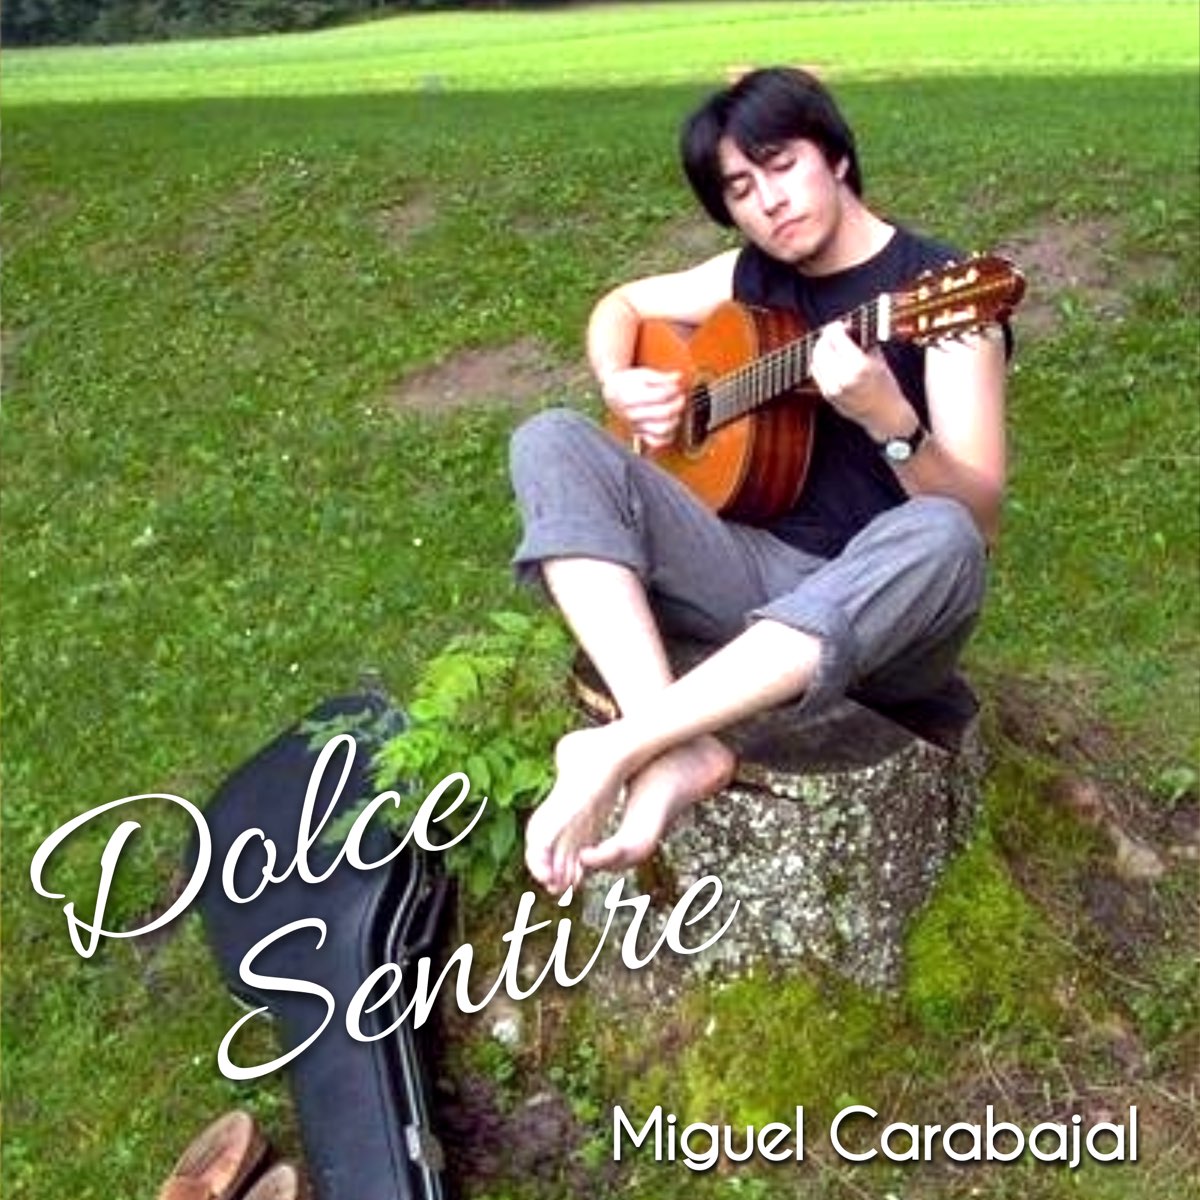 Dolce sentire (feat. Riz Ortolani) - Single di Miguel Carabajal su Apple  Music